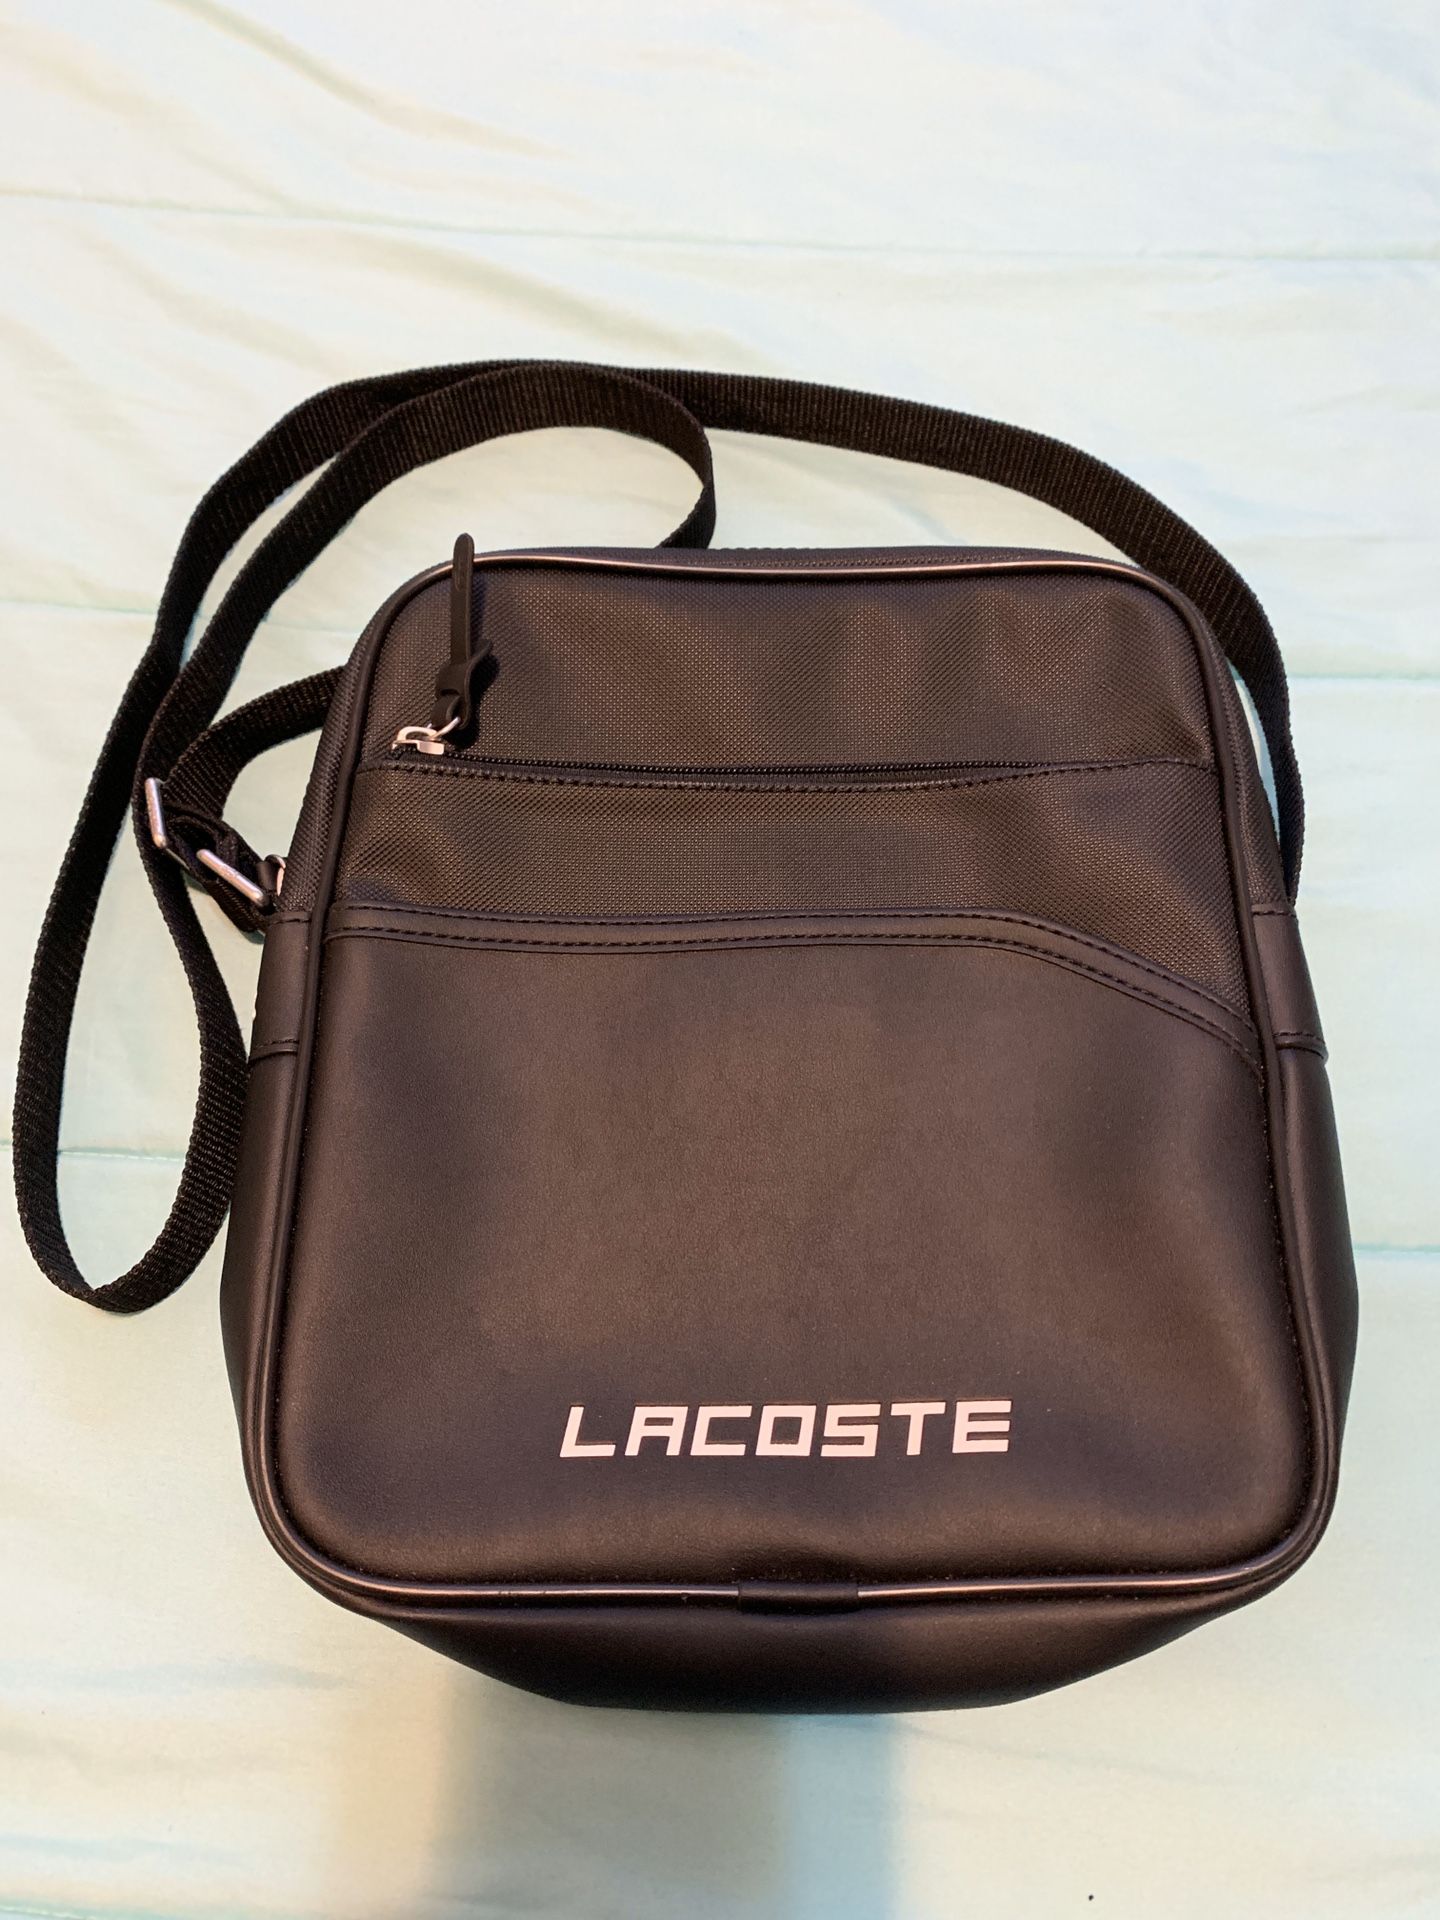 Lacoste crossbody messenger bag unisex